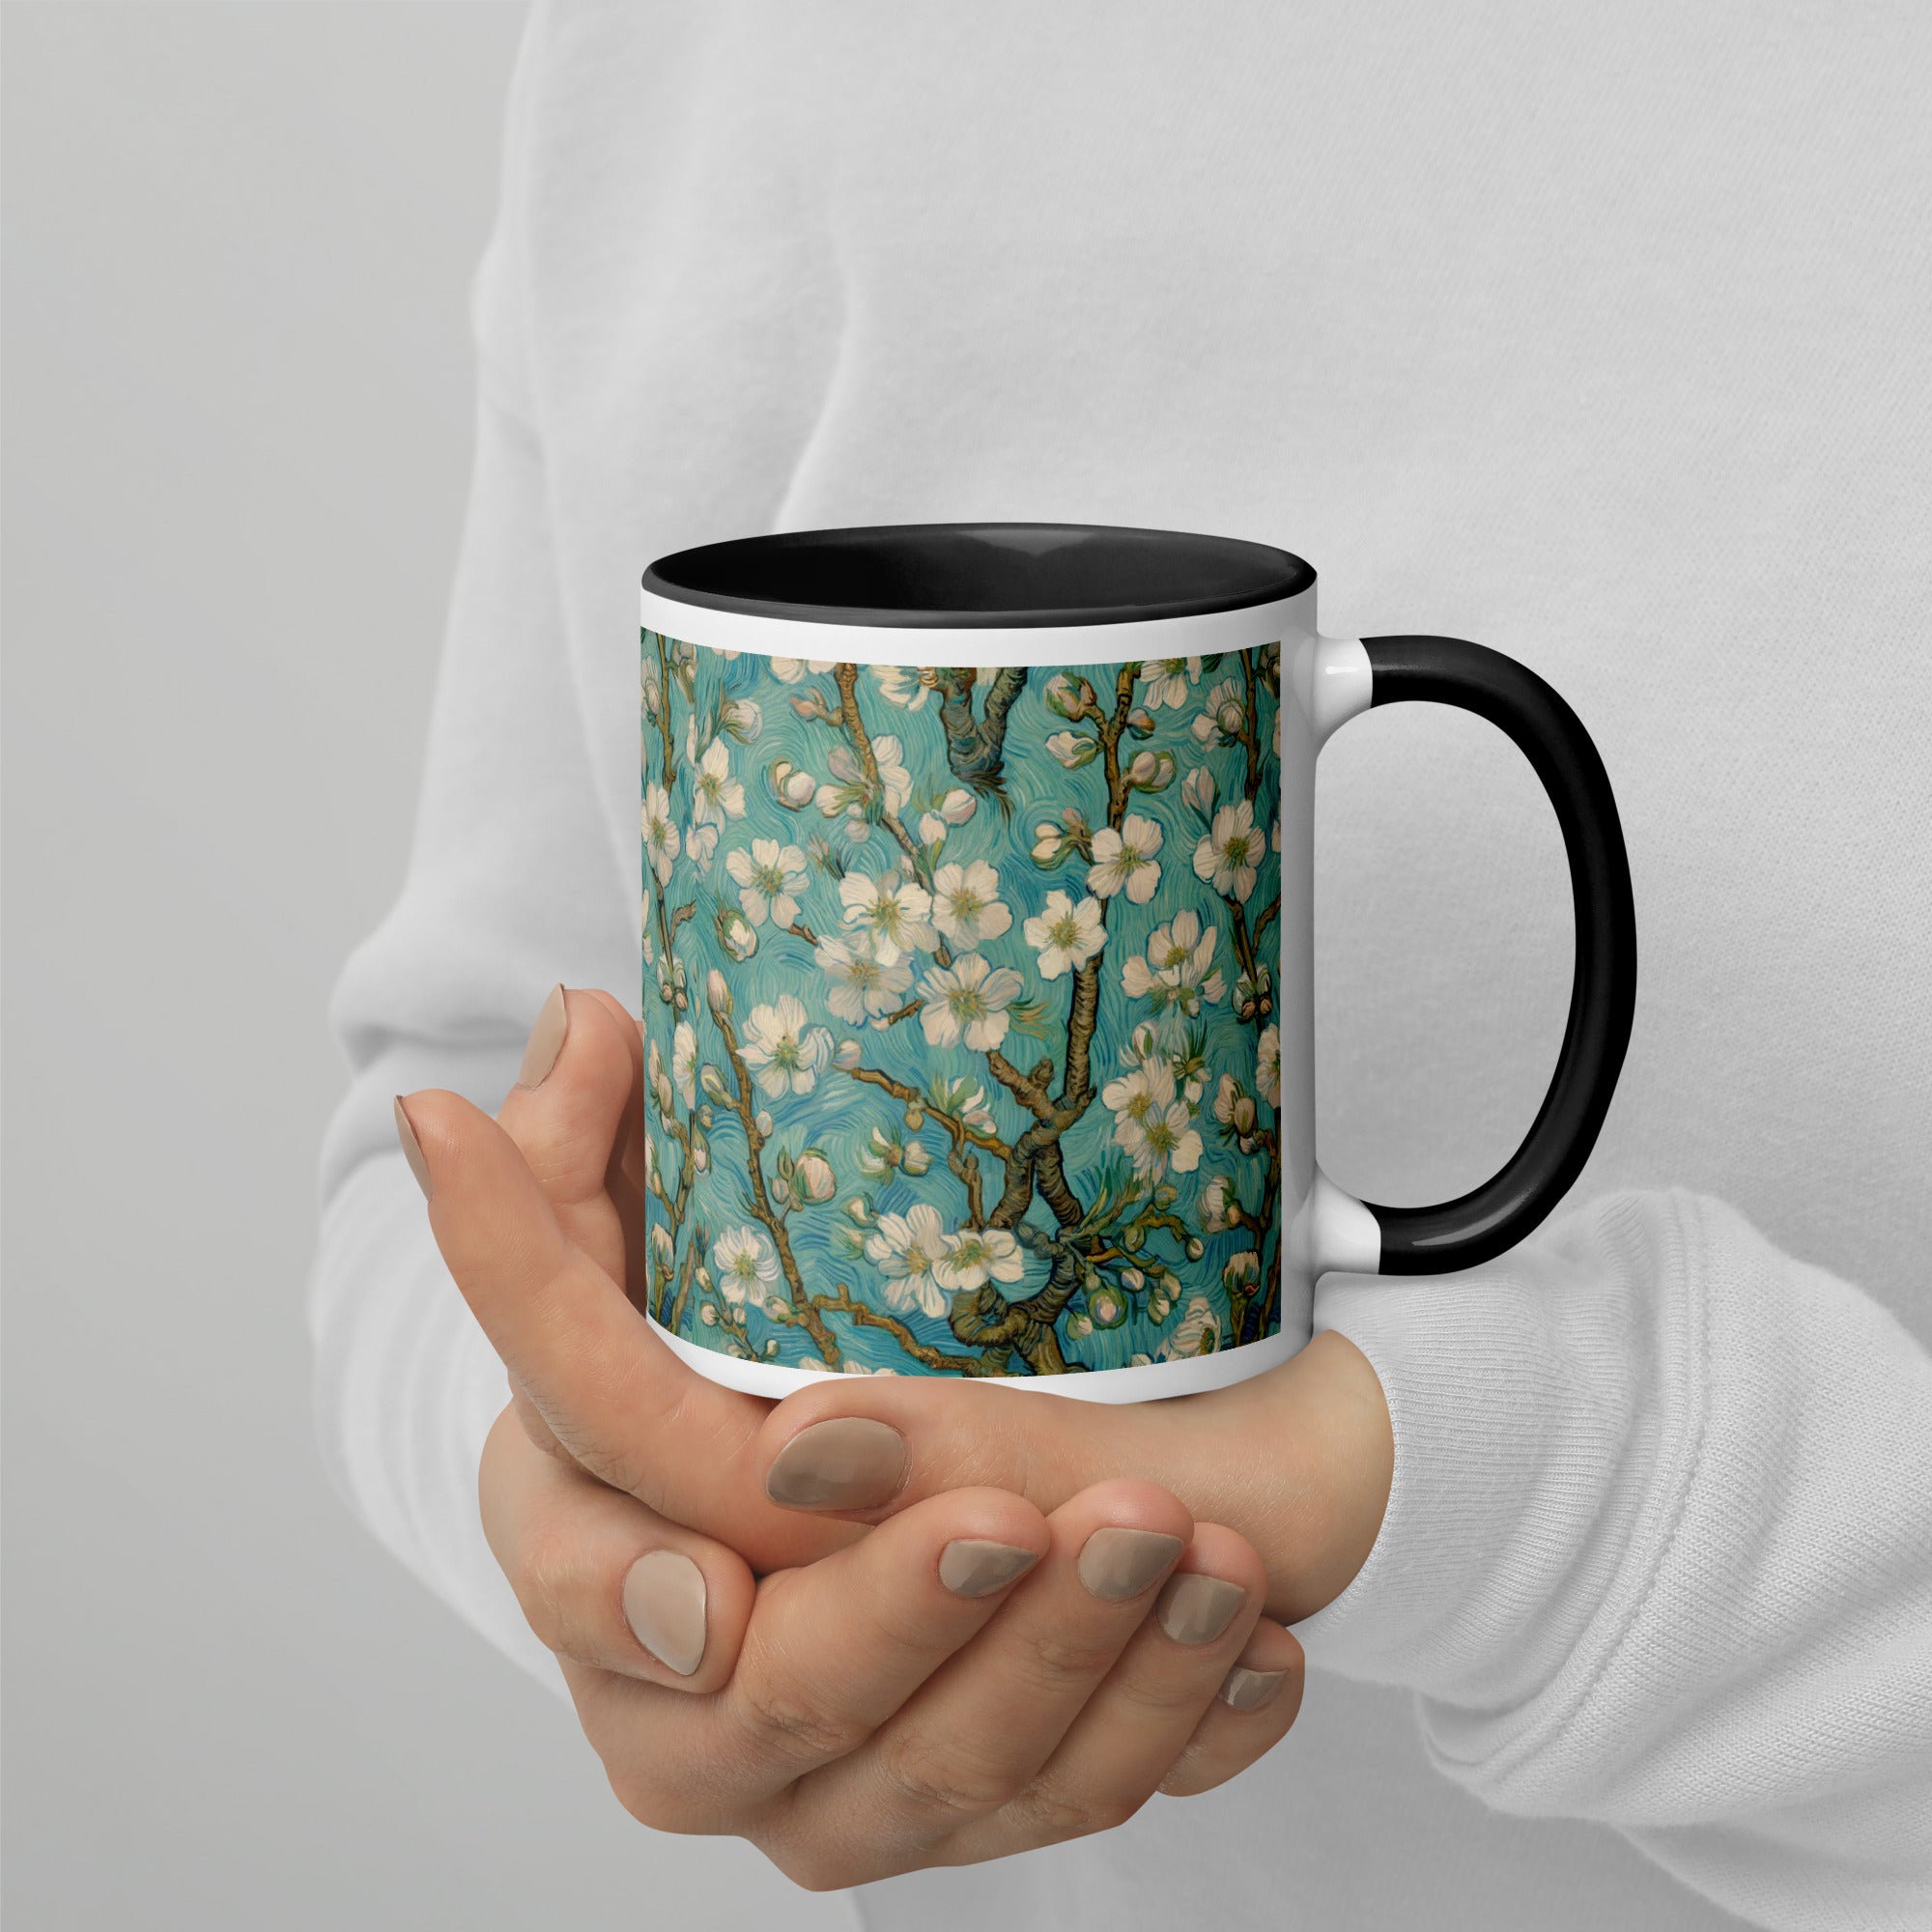 Vincent van Gogh 'Almond Blossom' Famous Painting Ceramic Mug | Premium Art Mug